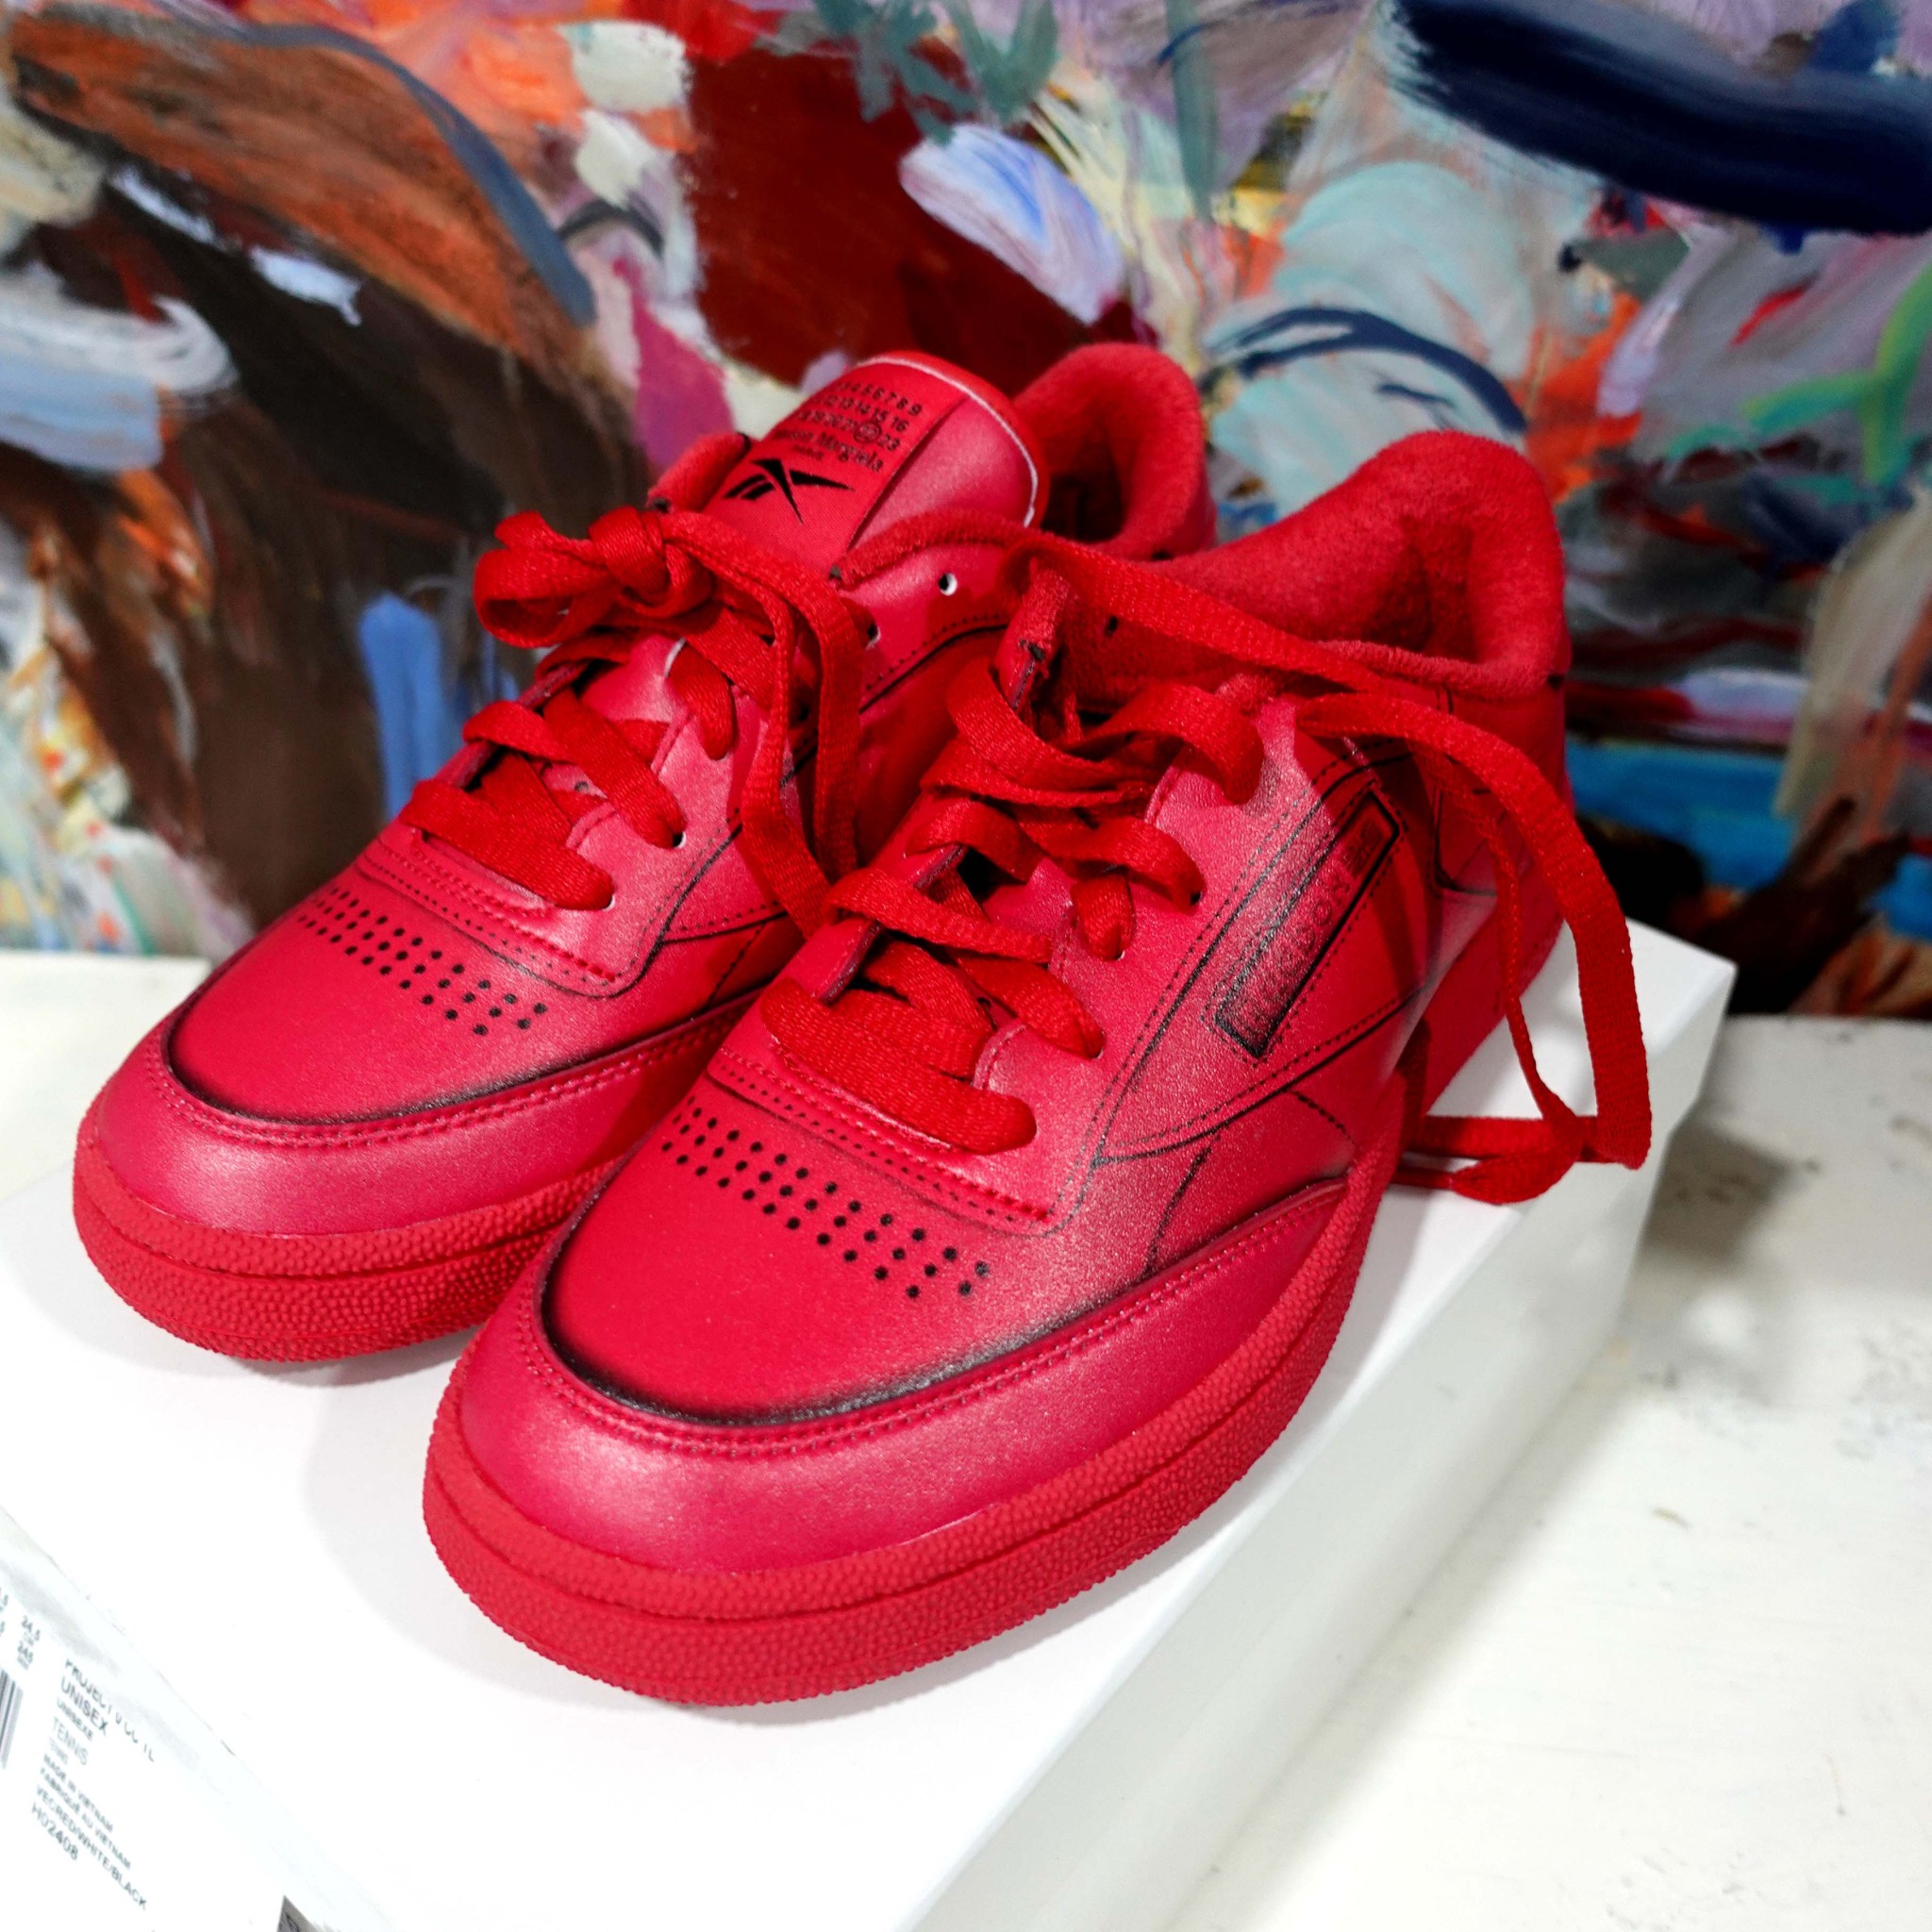 Margiela X Reebok Sneakers in fire red with black line print - Shop Mr.Travel Genius Antique Men's Shoes - Pinkoi